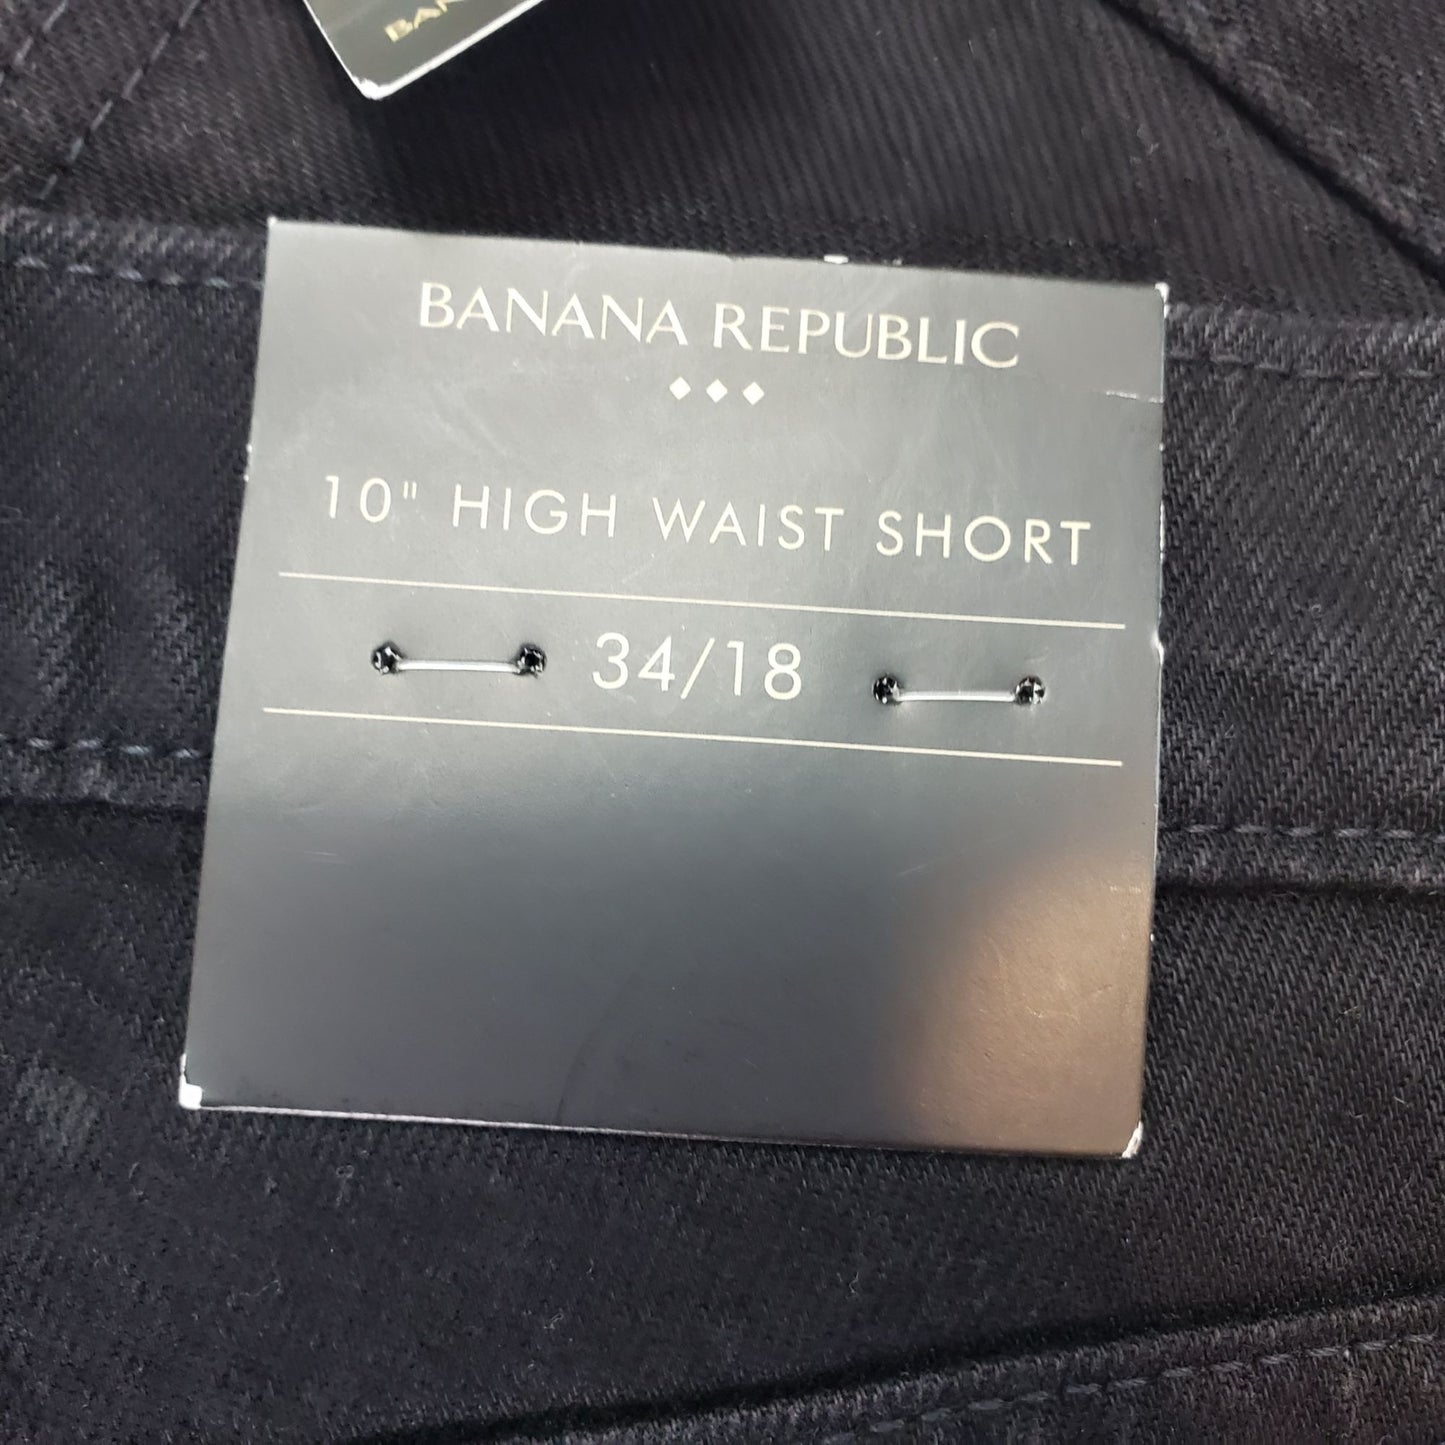 NWT Banana Republic Factory 10" High Waist Short Size 34